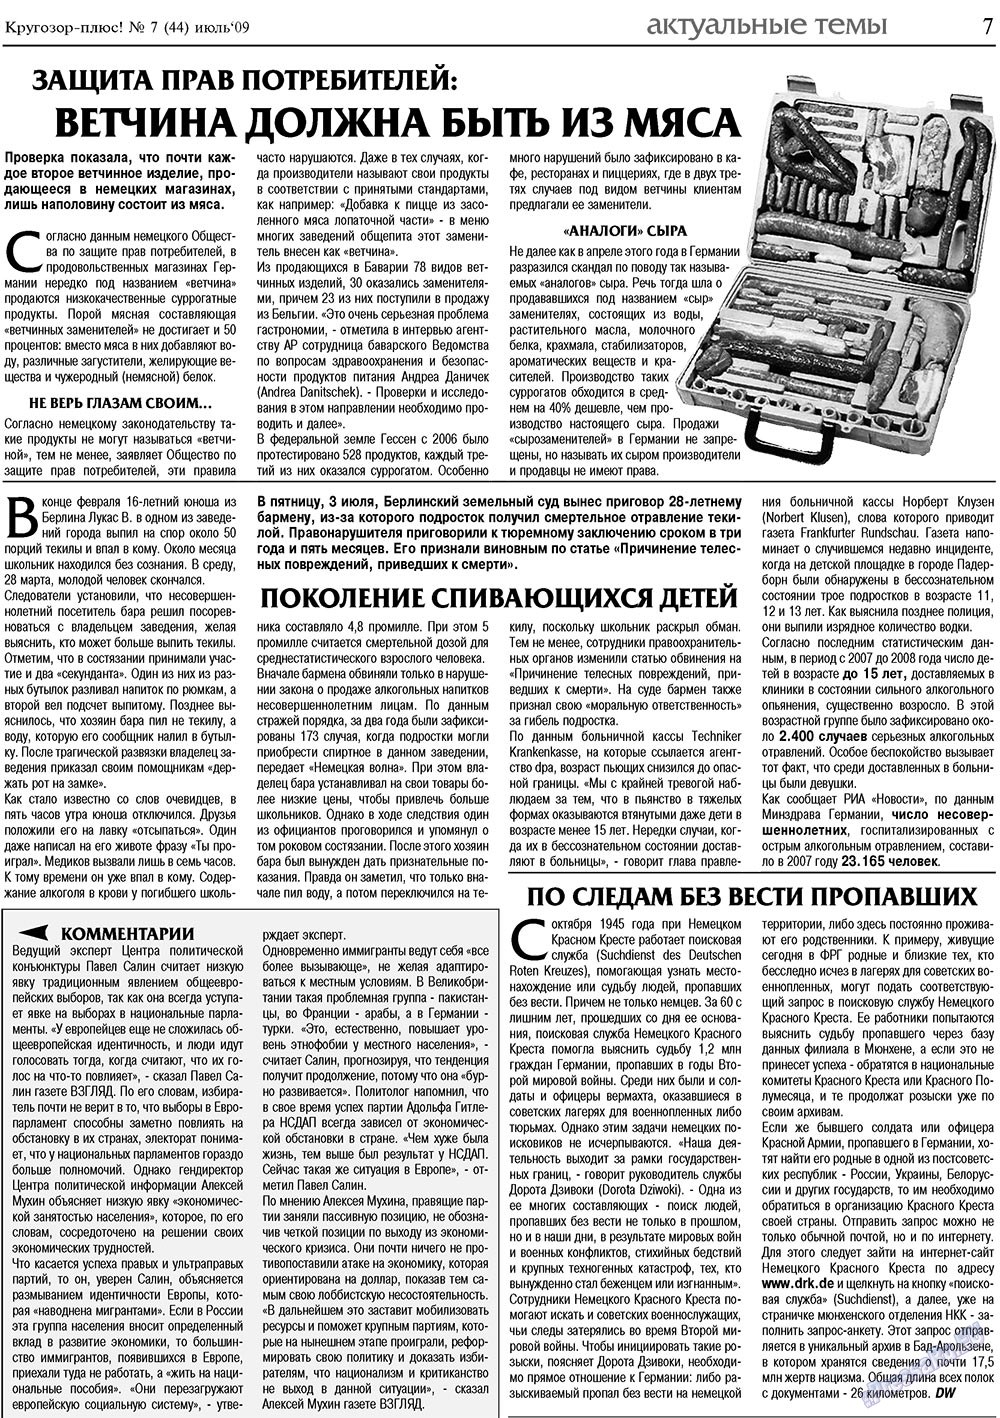 Кругозор плюс! (газета). 2009 год, номер 7, стр. 7